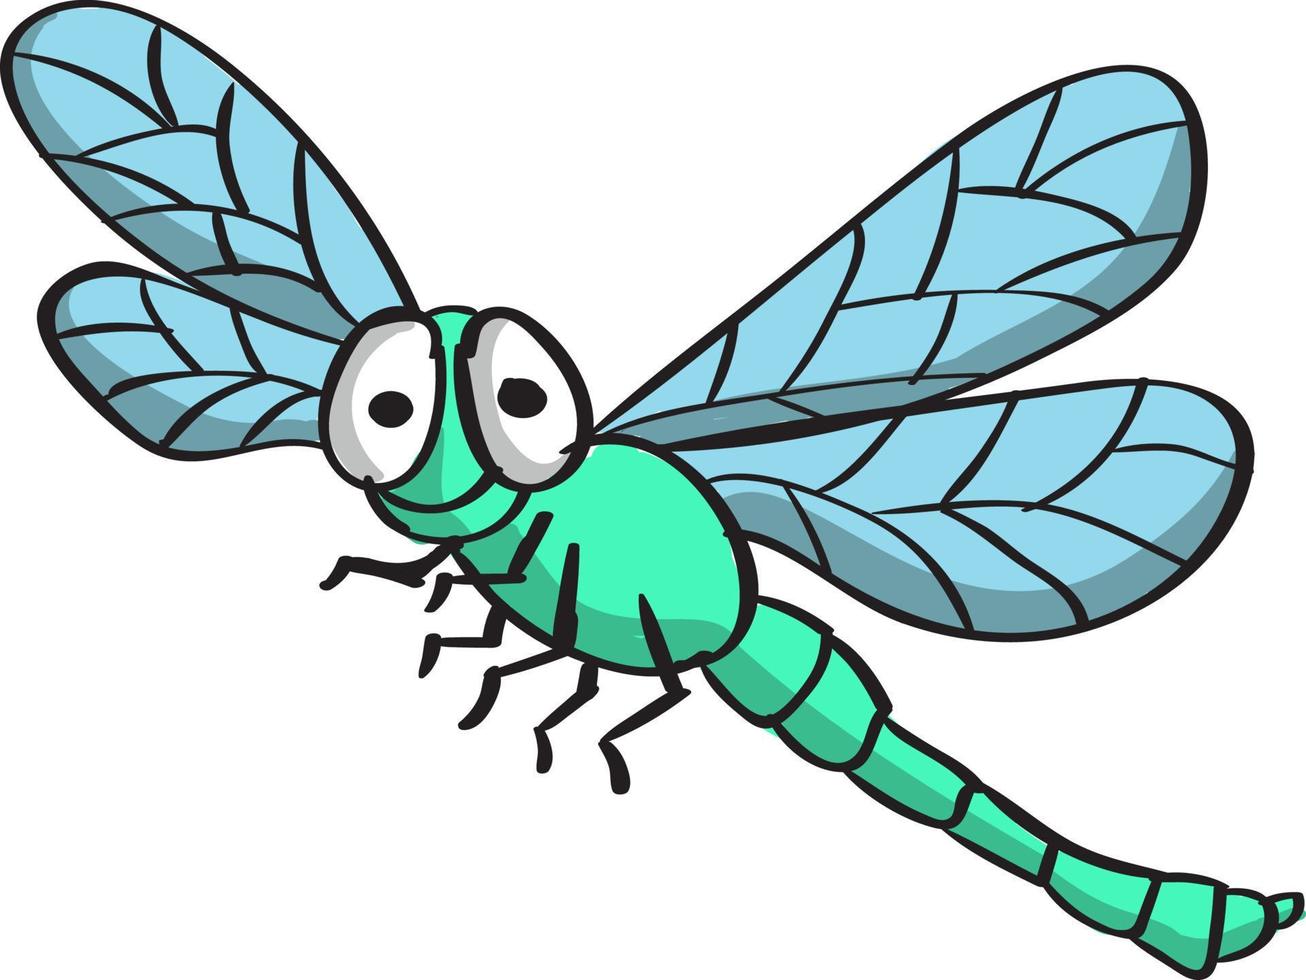 Dragonfly, illustration, vector on white background.